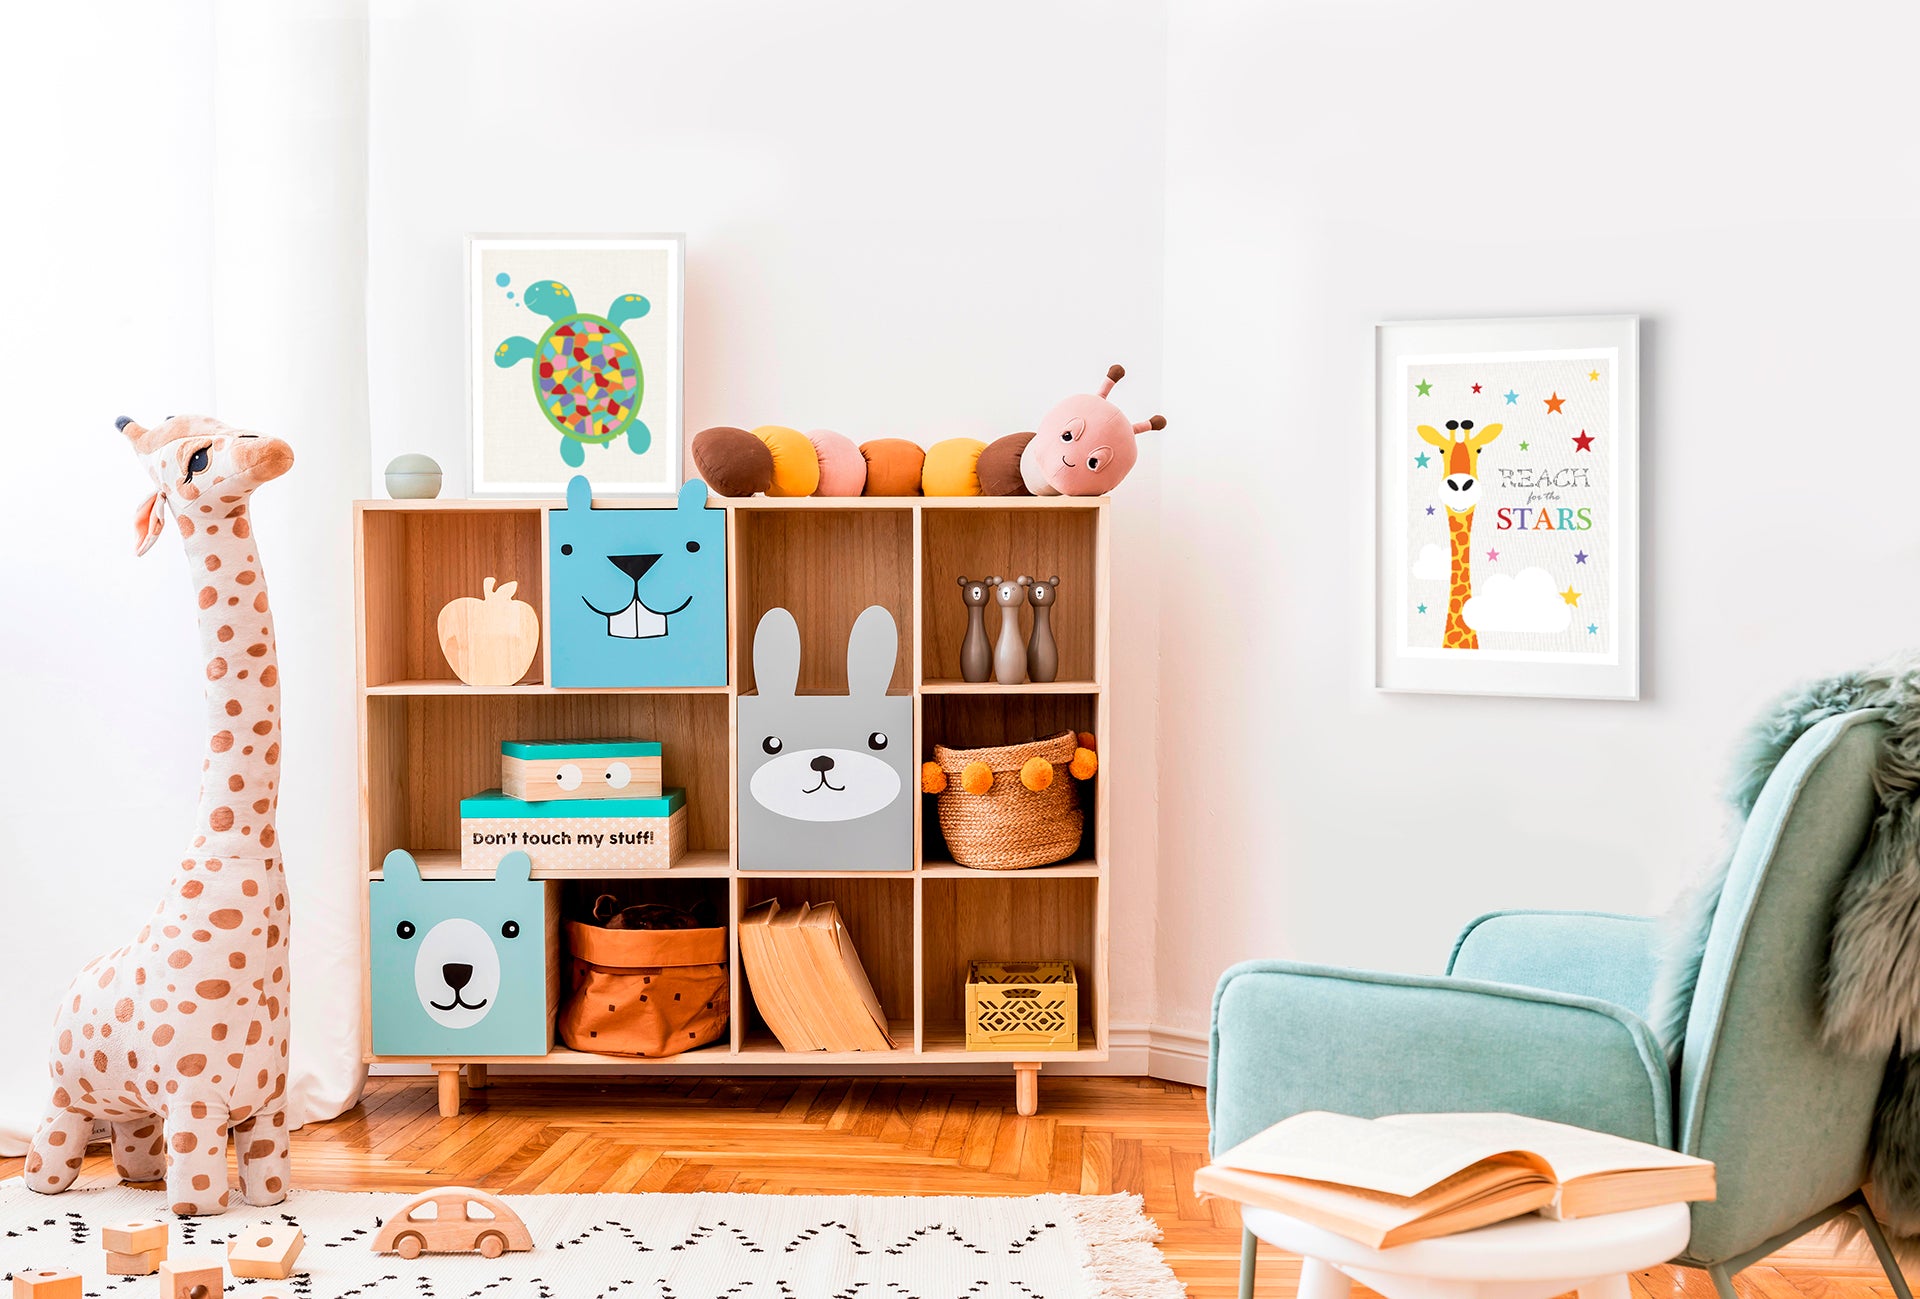 fun kids bedroom will shelves, a toy giraffe and colourful giraffe print